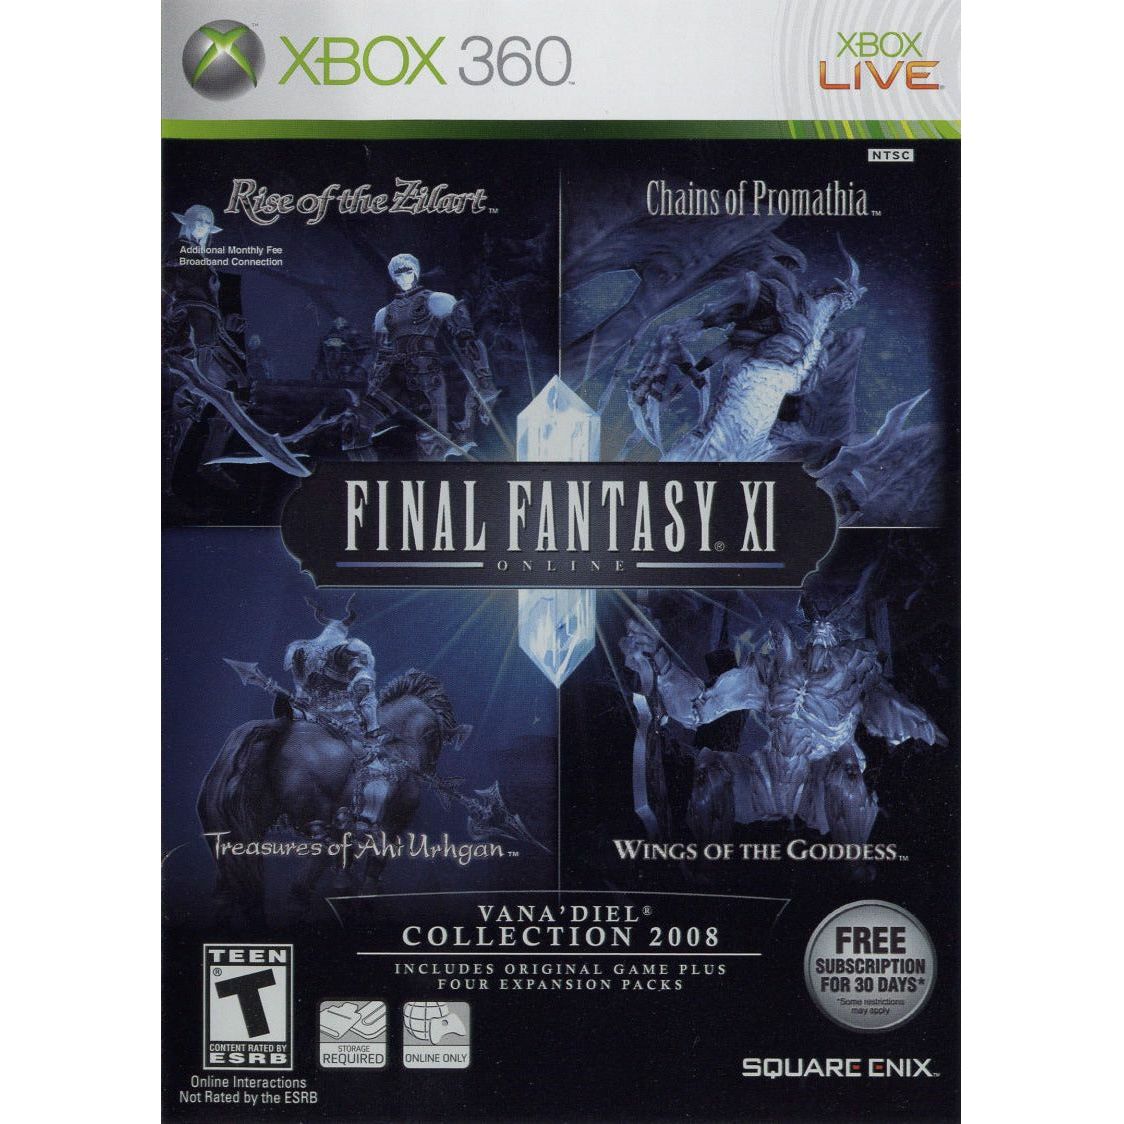 XBOX 360 - Final Fantasy XI Vana' Diel Collection 2008